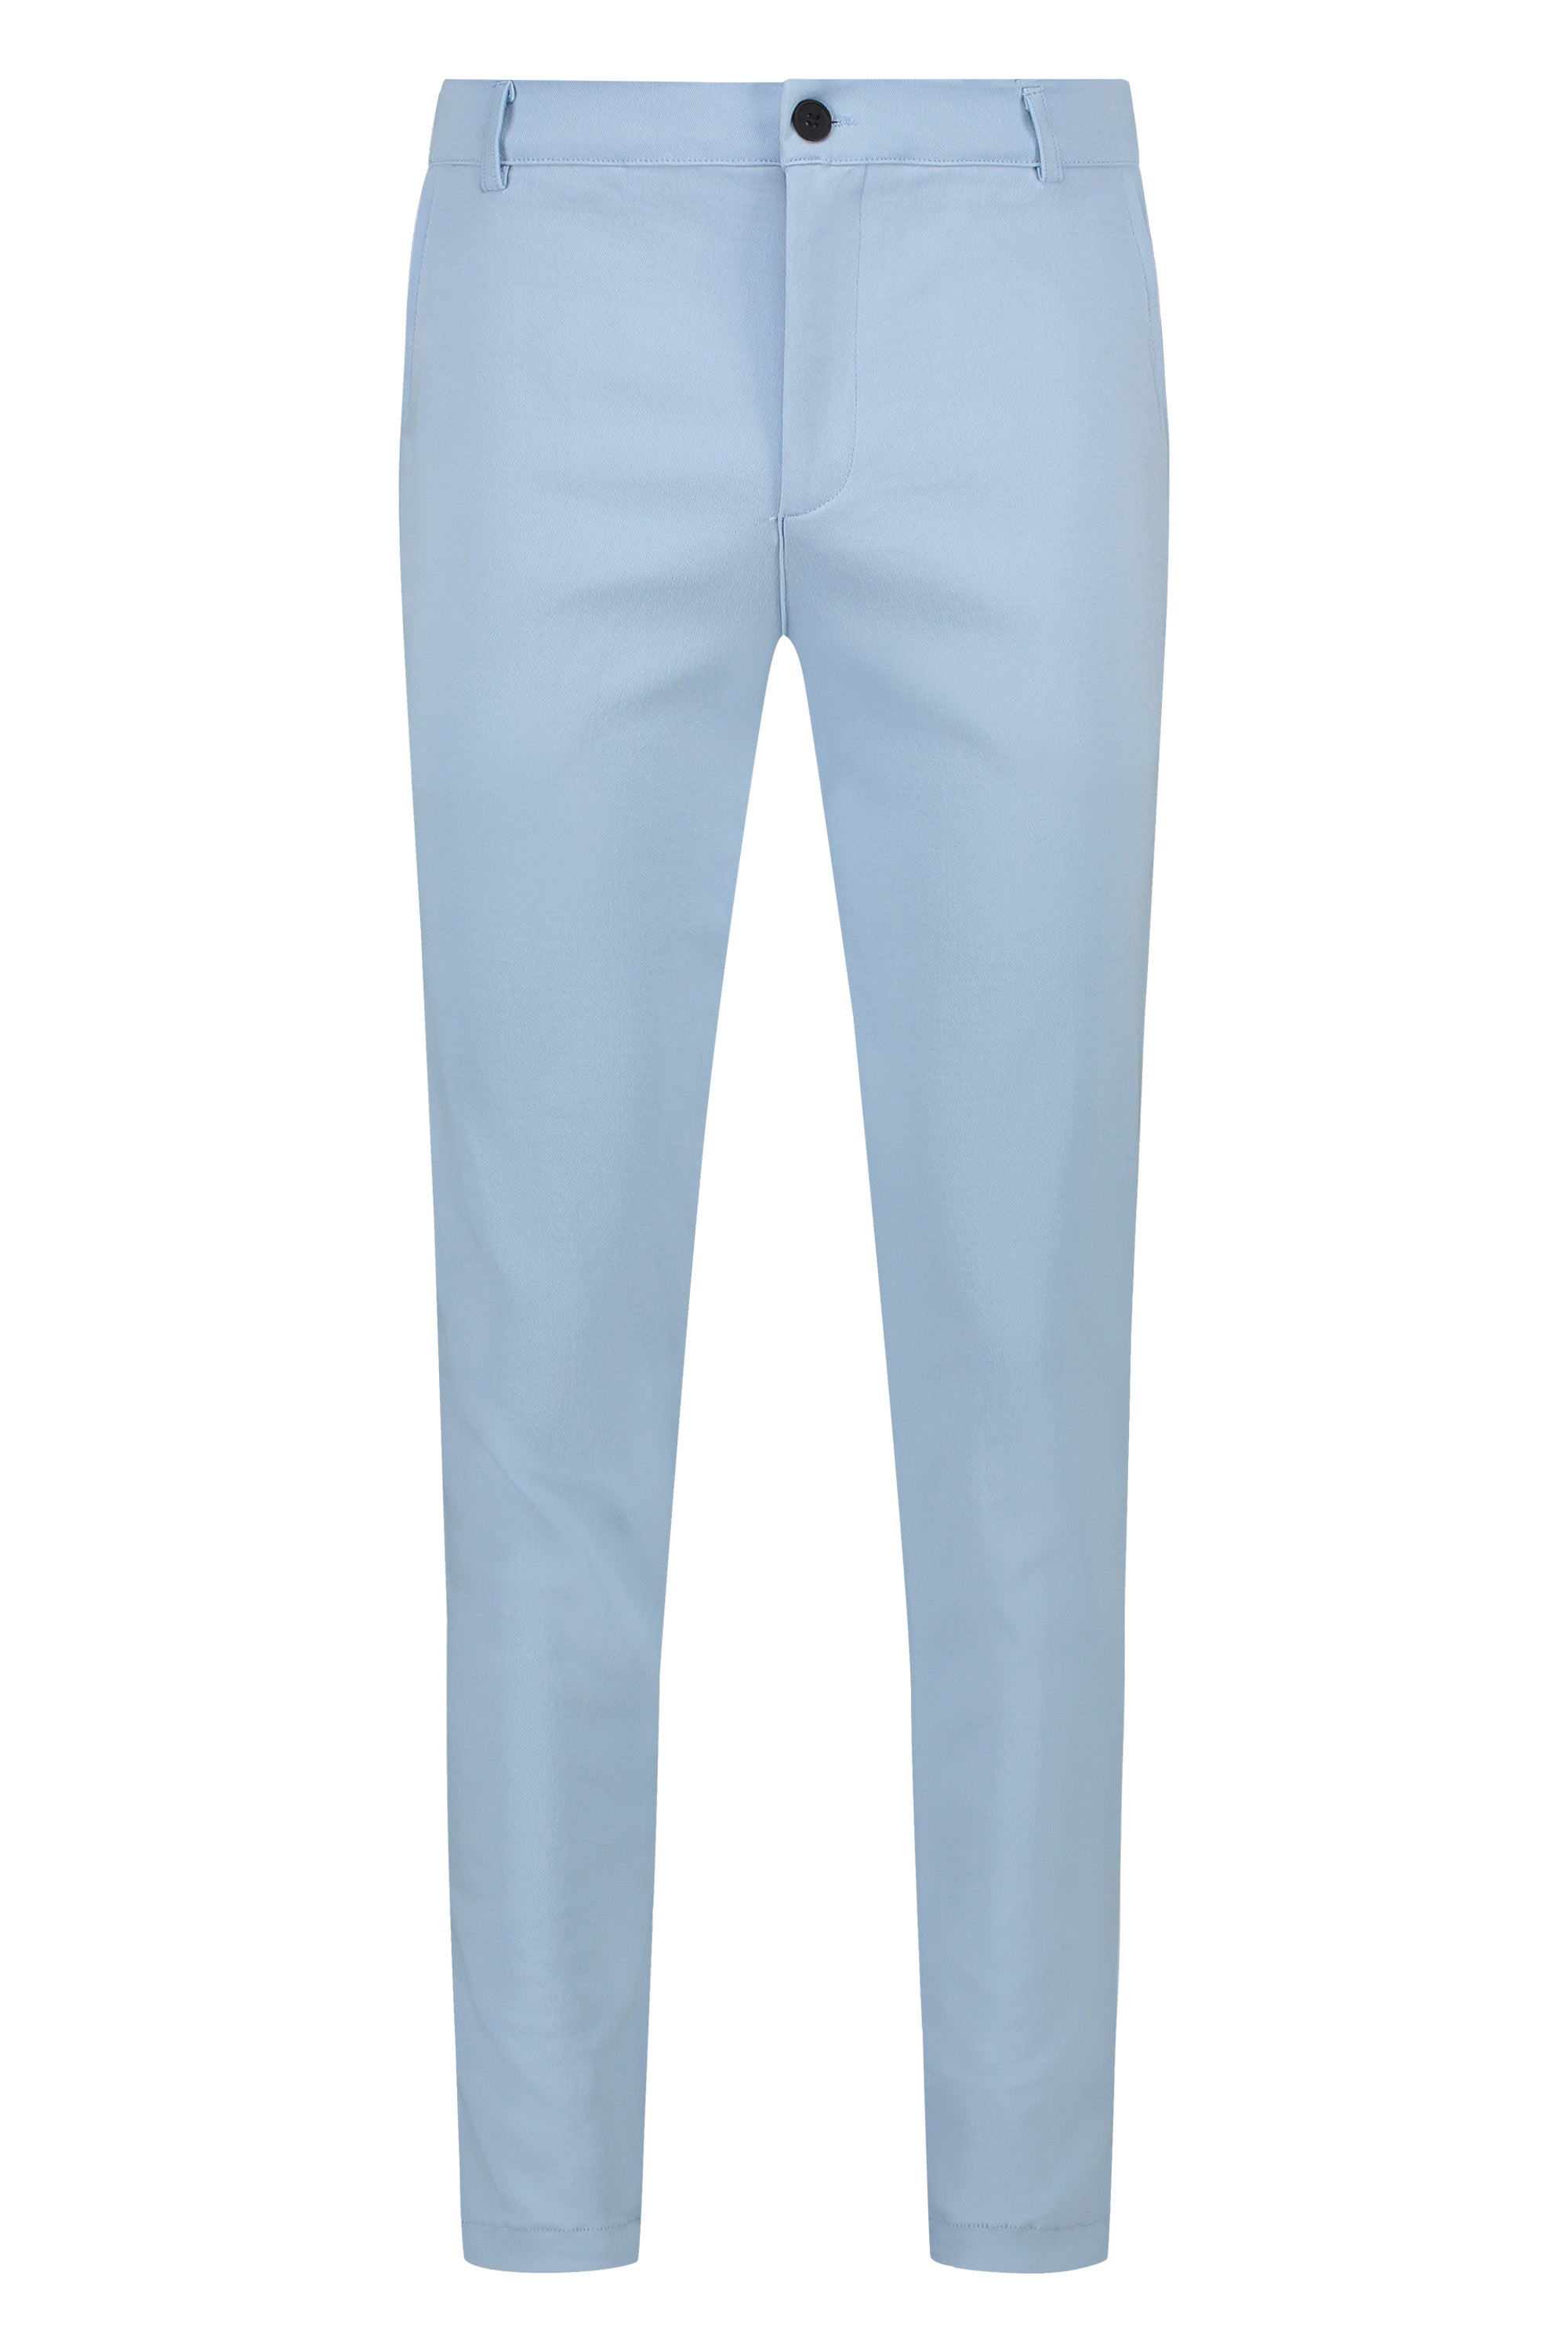 Super stretch pantalon light blue